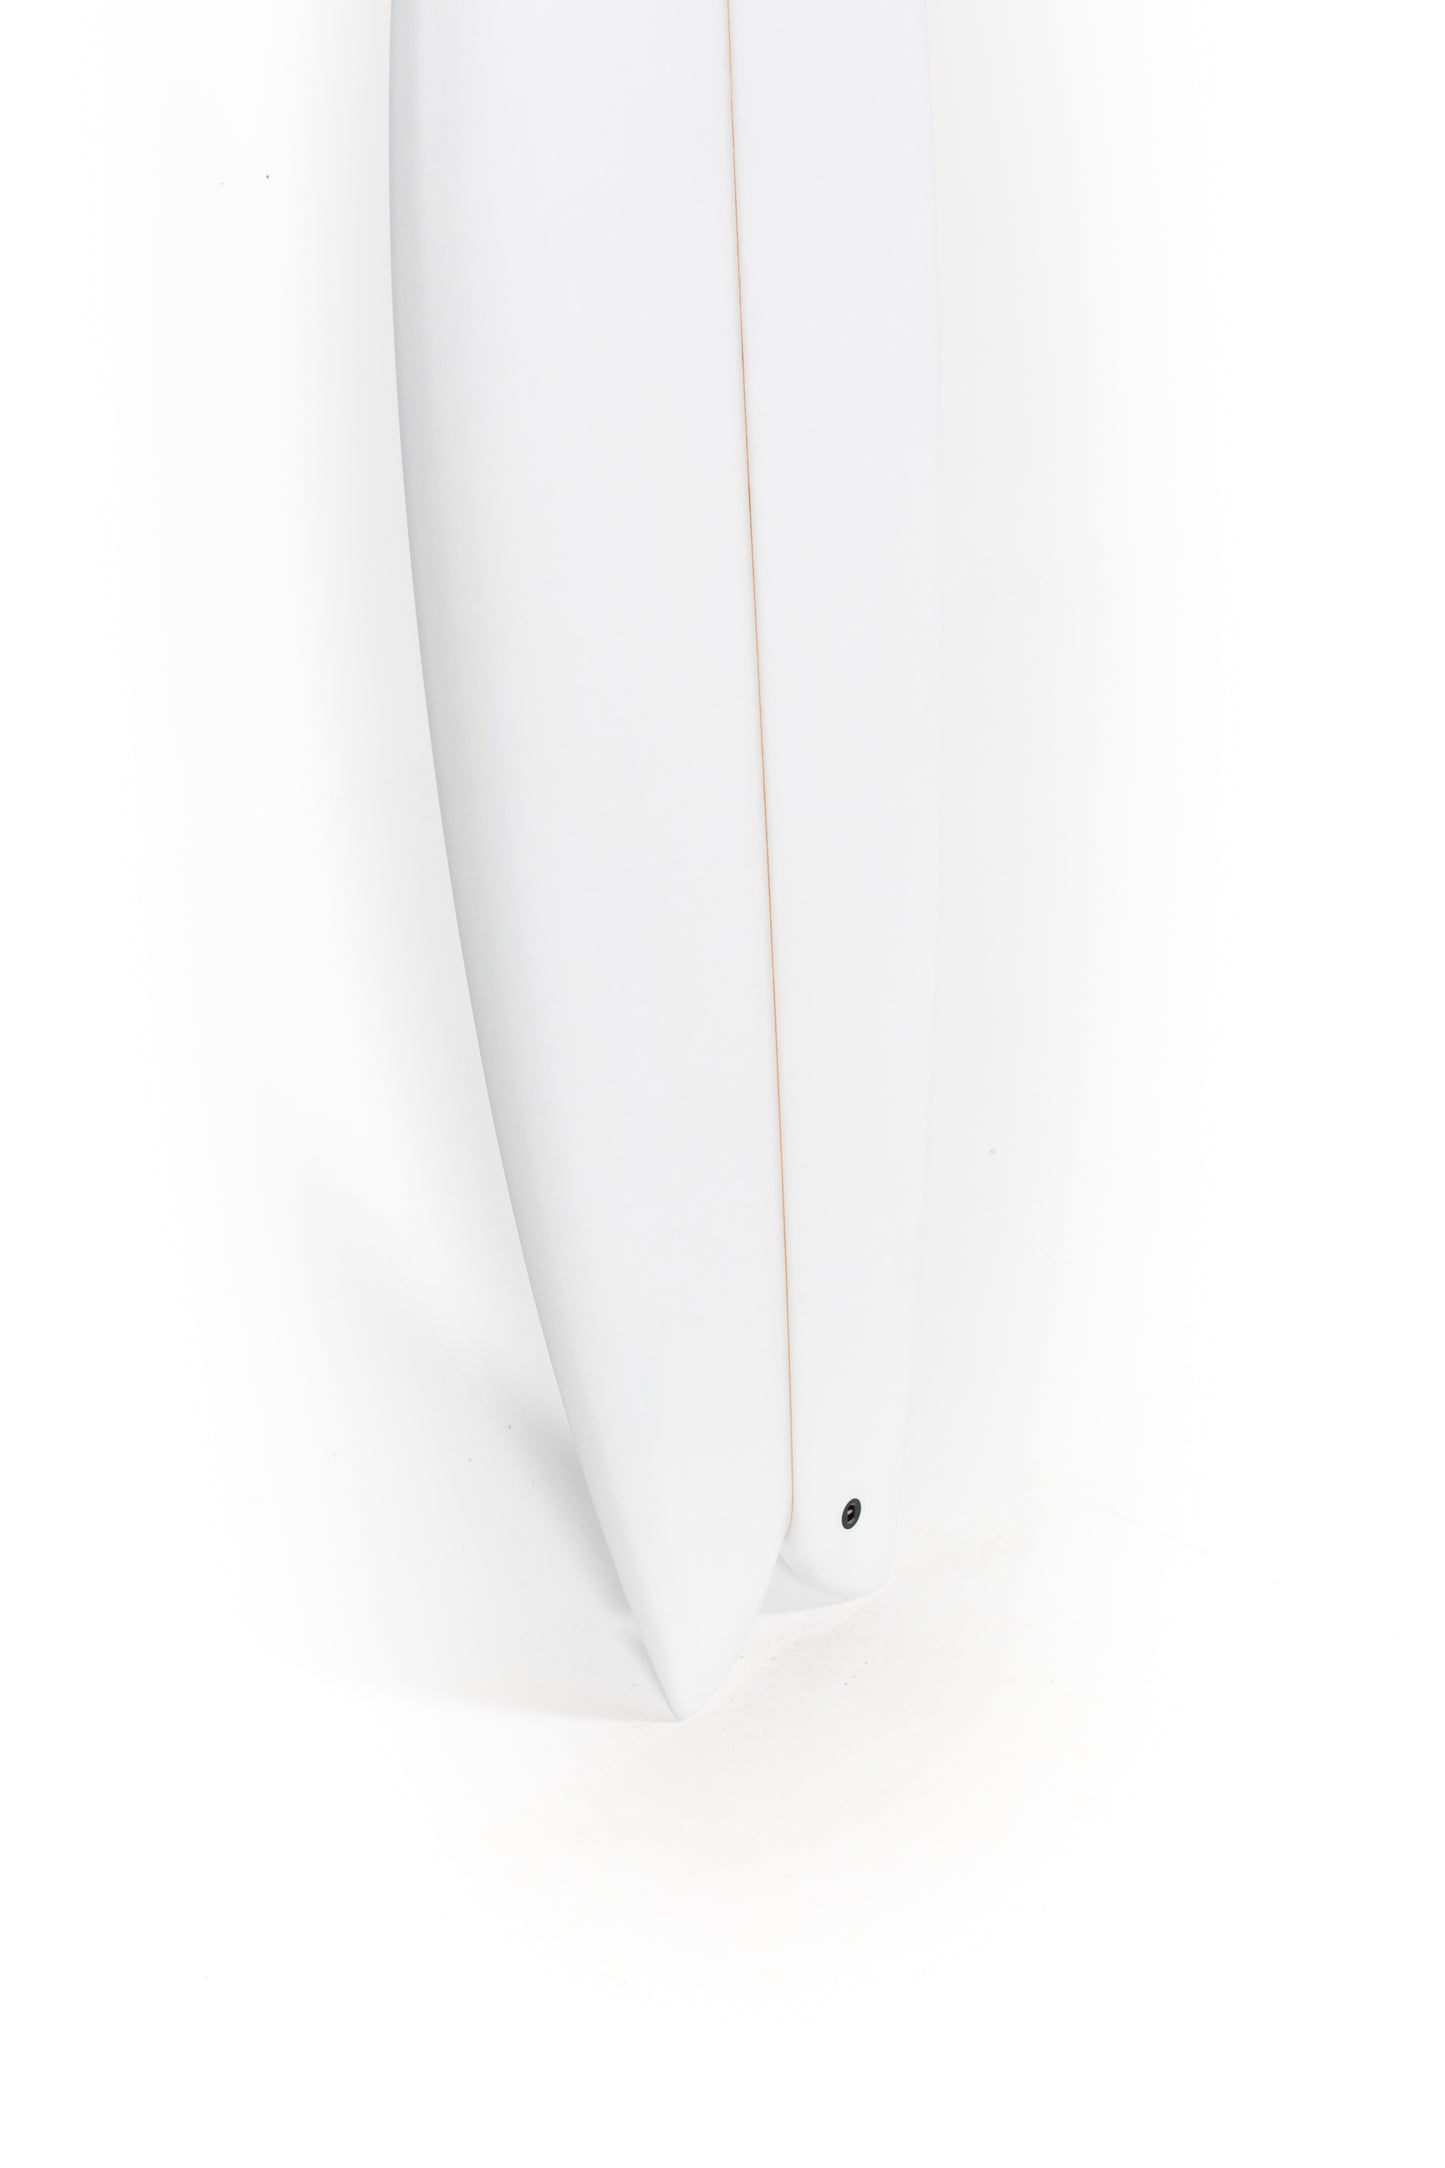 
                  
                    Pukas Surf Shop - Kream Surfboards - FISH - 5'10" - 21 5/16 - 2 9/16 - 36.50L
                  
                